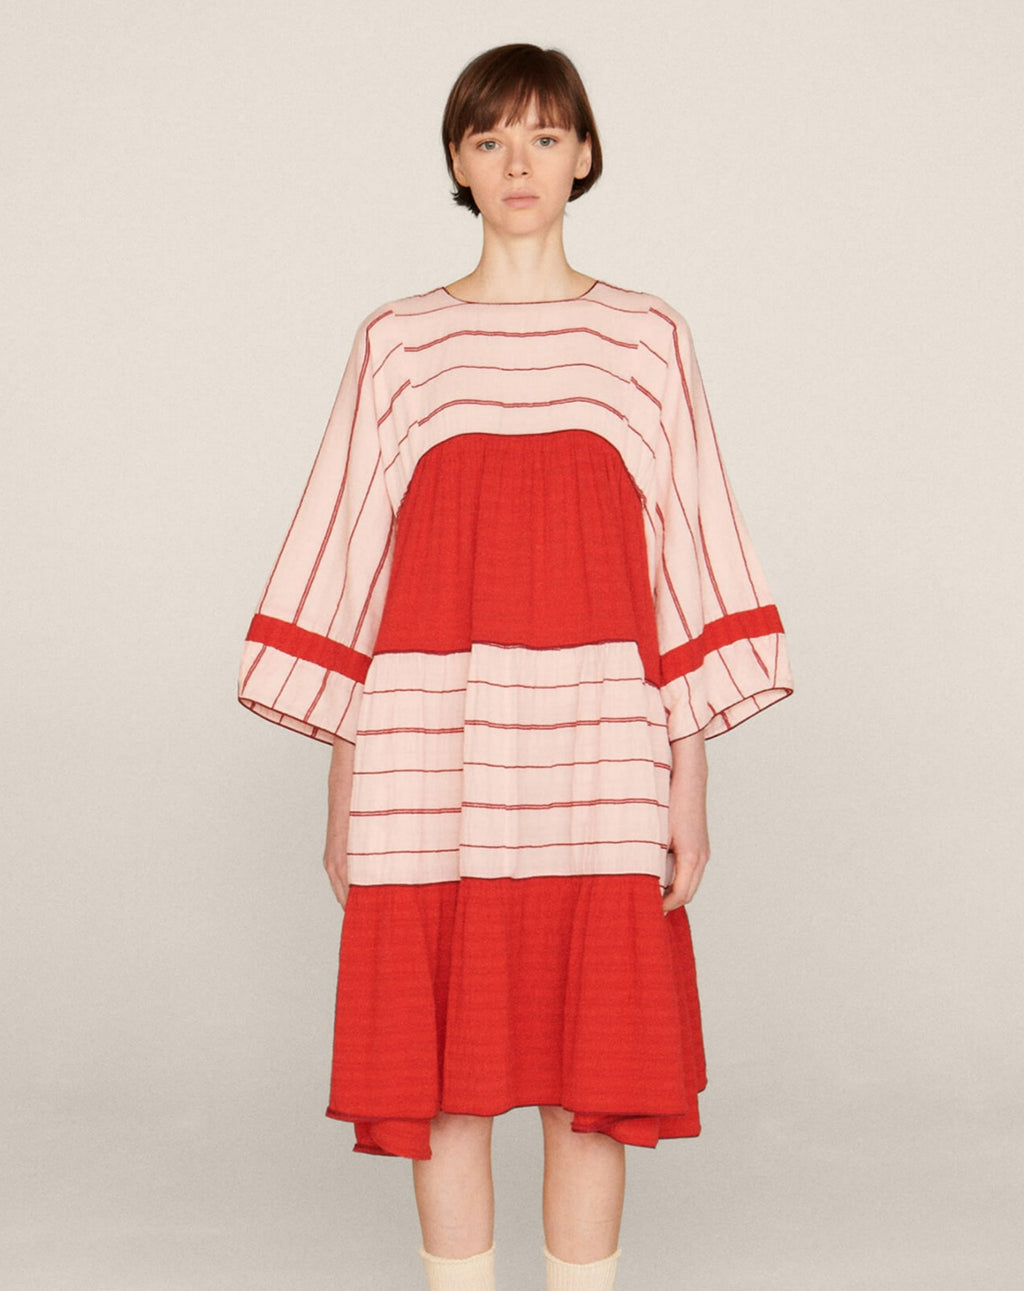 Paloma Cotton Jacquard Dress